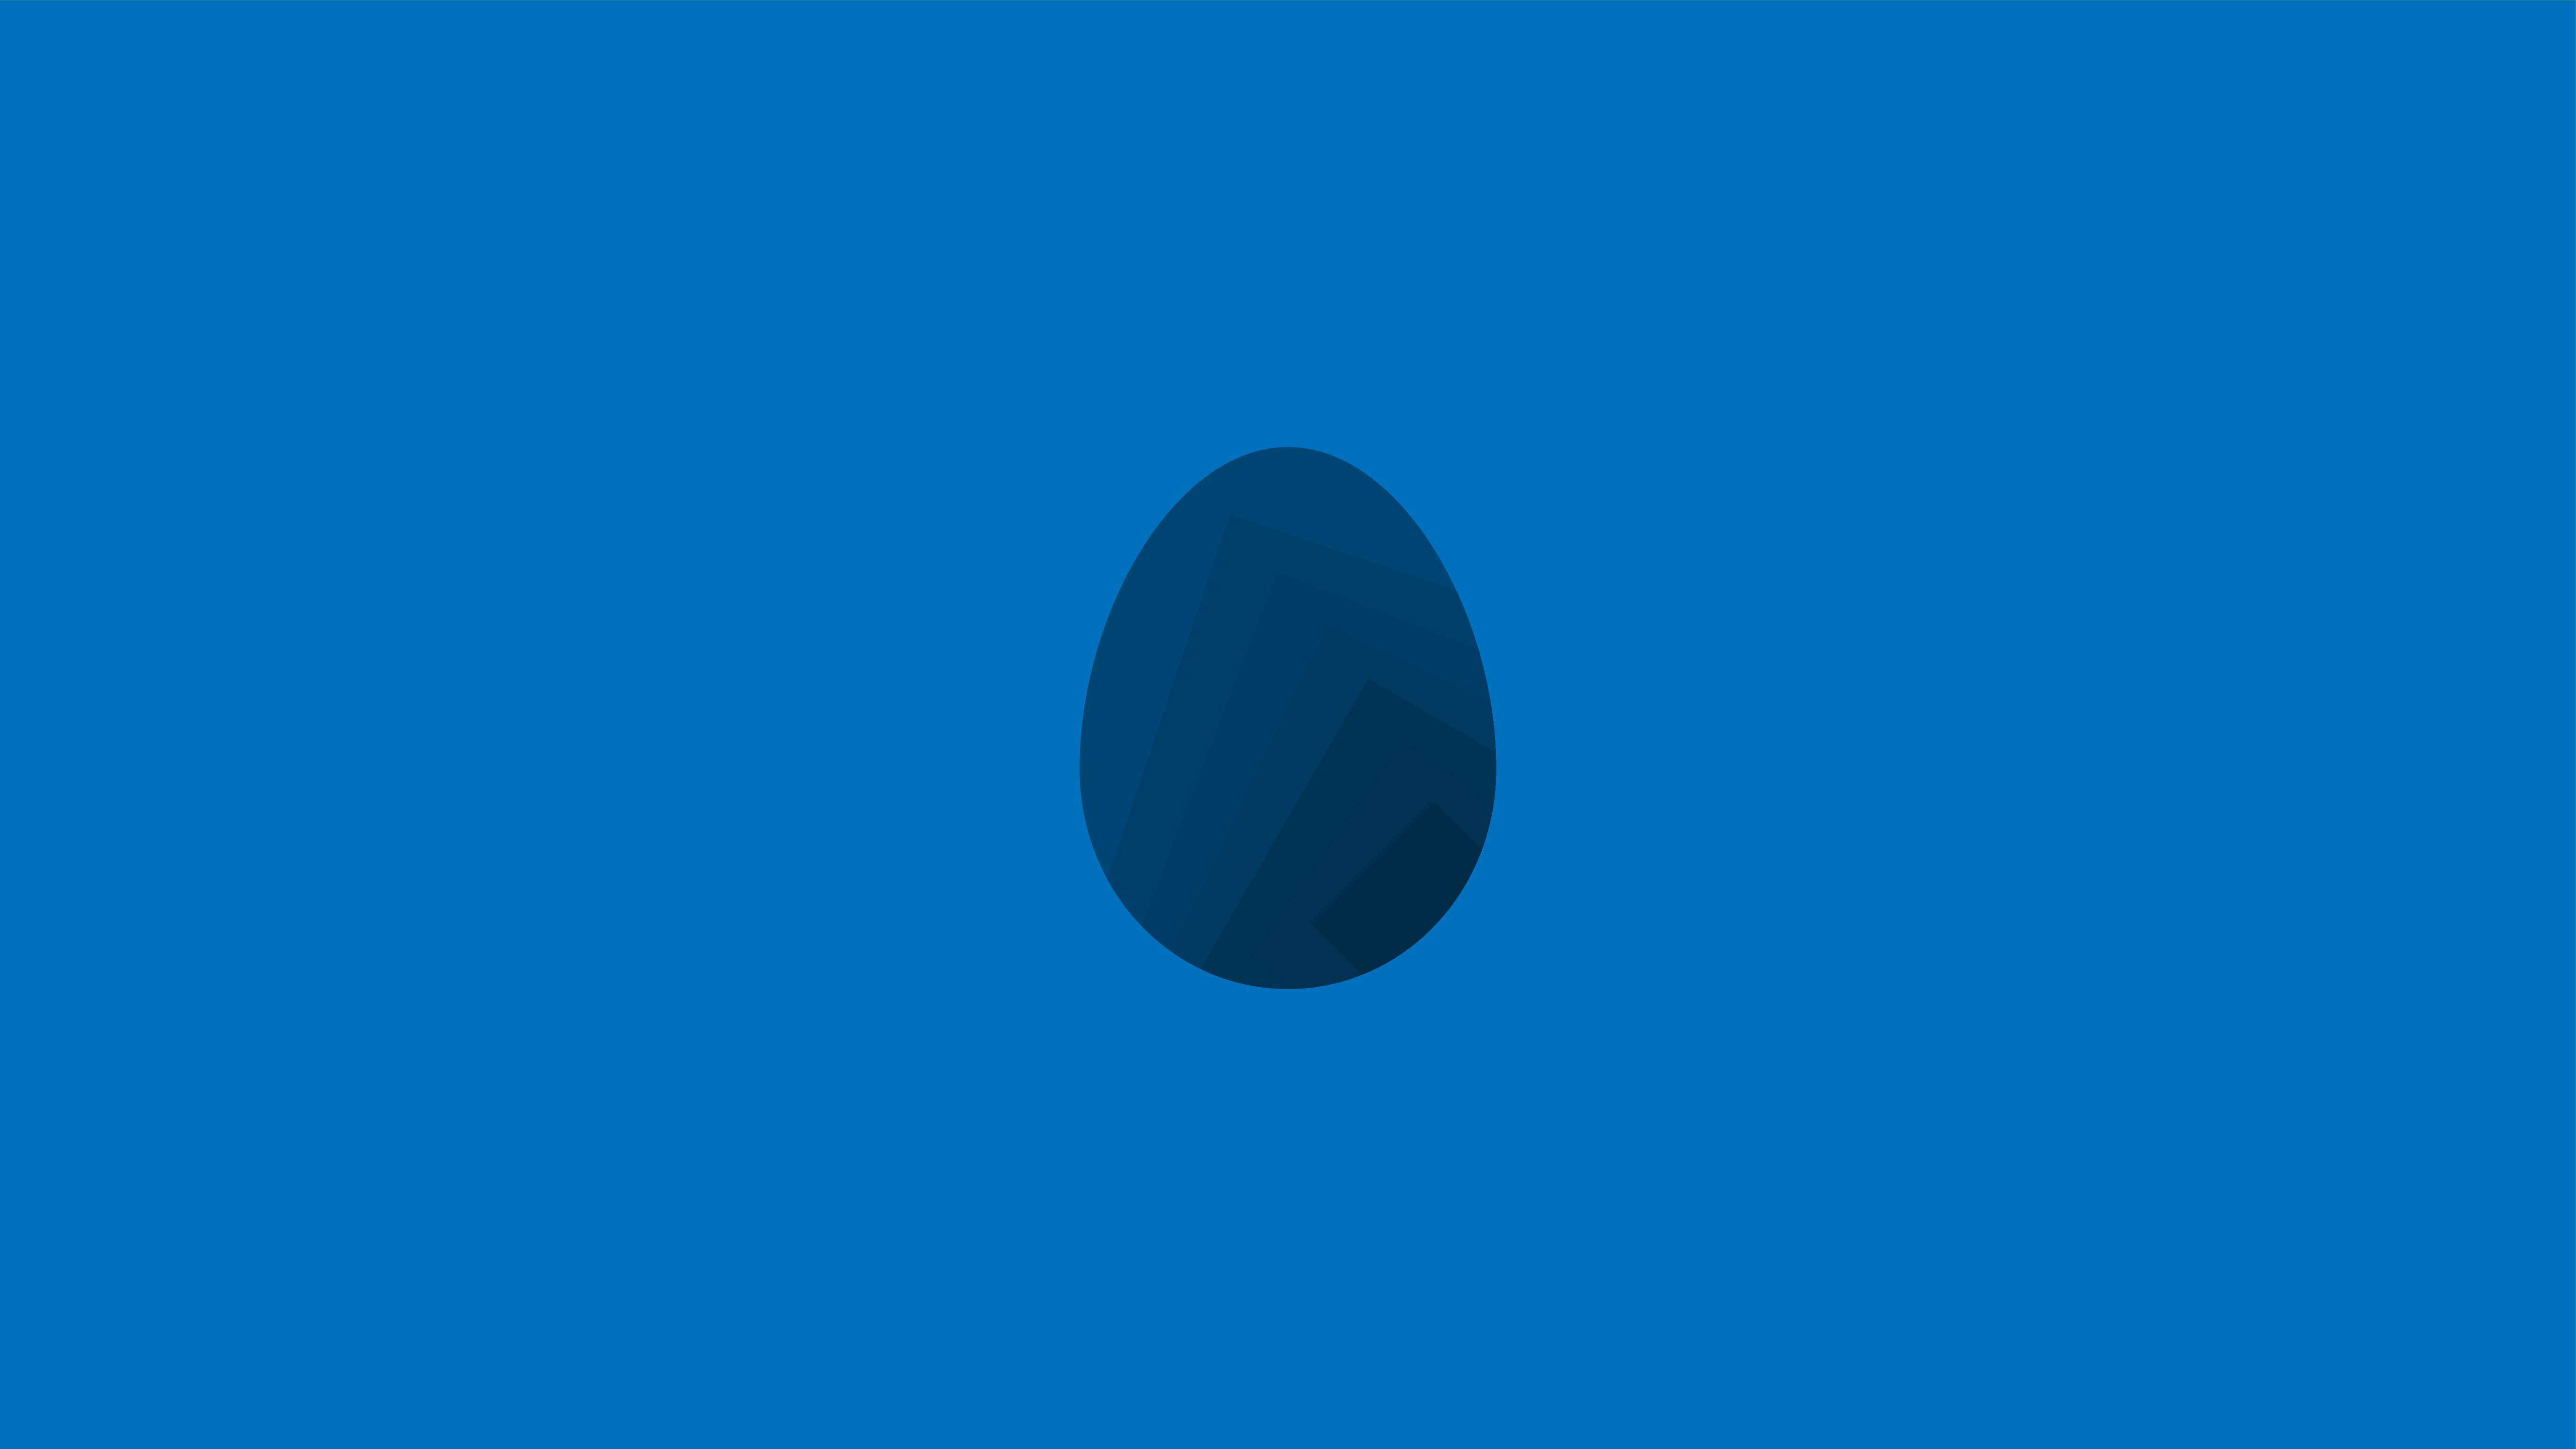 General 5443x3062 eggs minimalism selective coloring cold blue blue background digital art